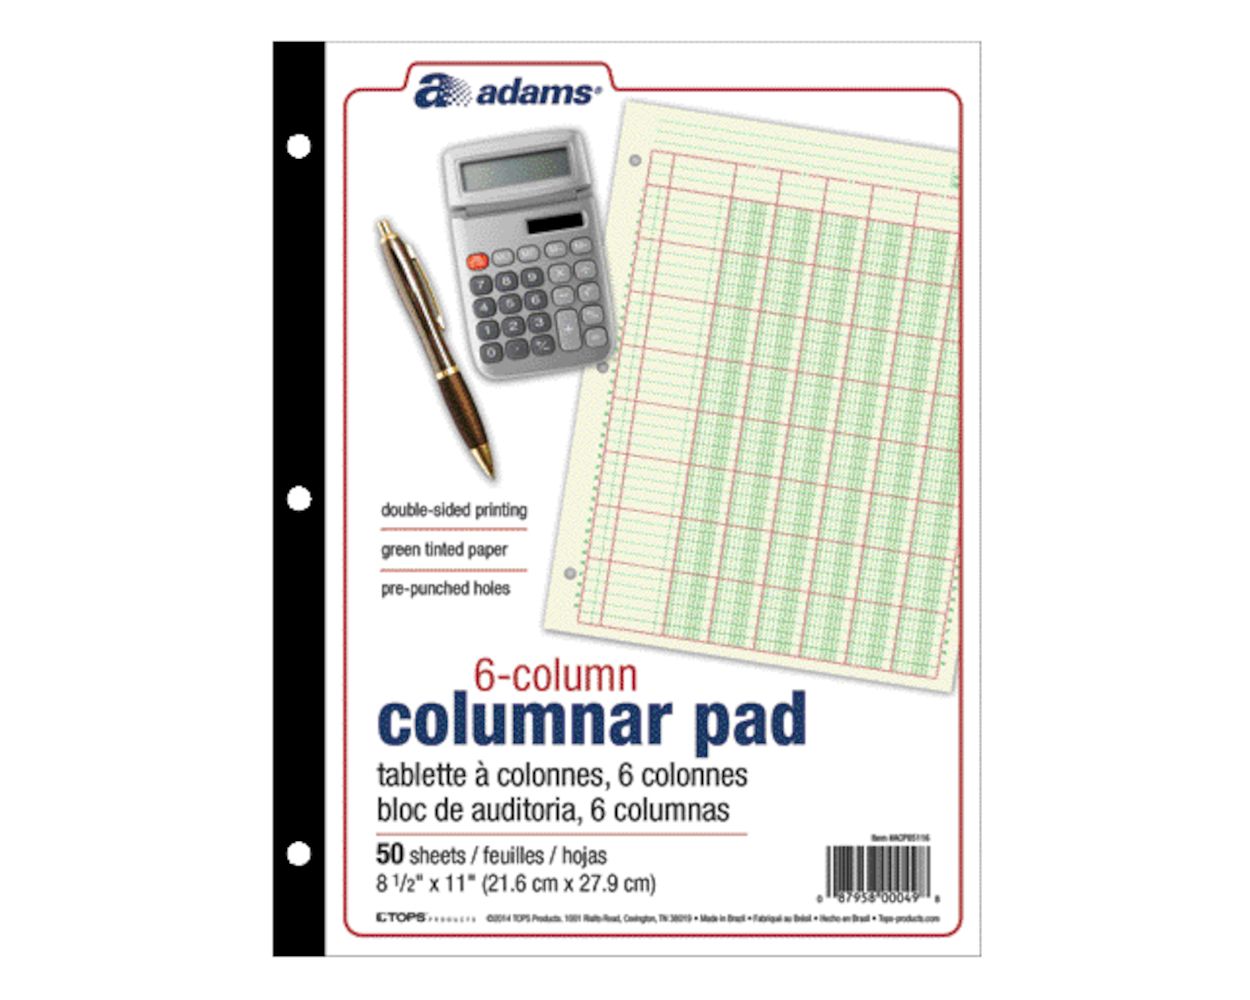 wholesale-columnar-pads-books-discounts-on-abfacp85116-bulk